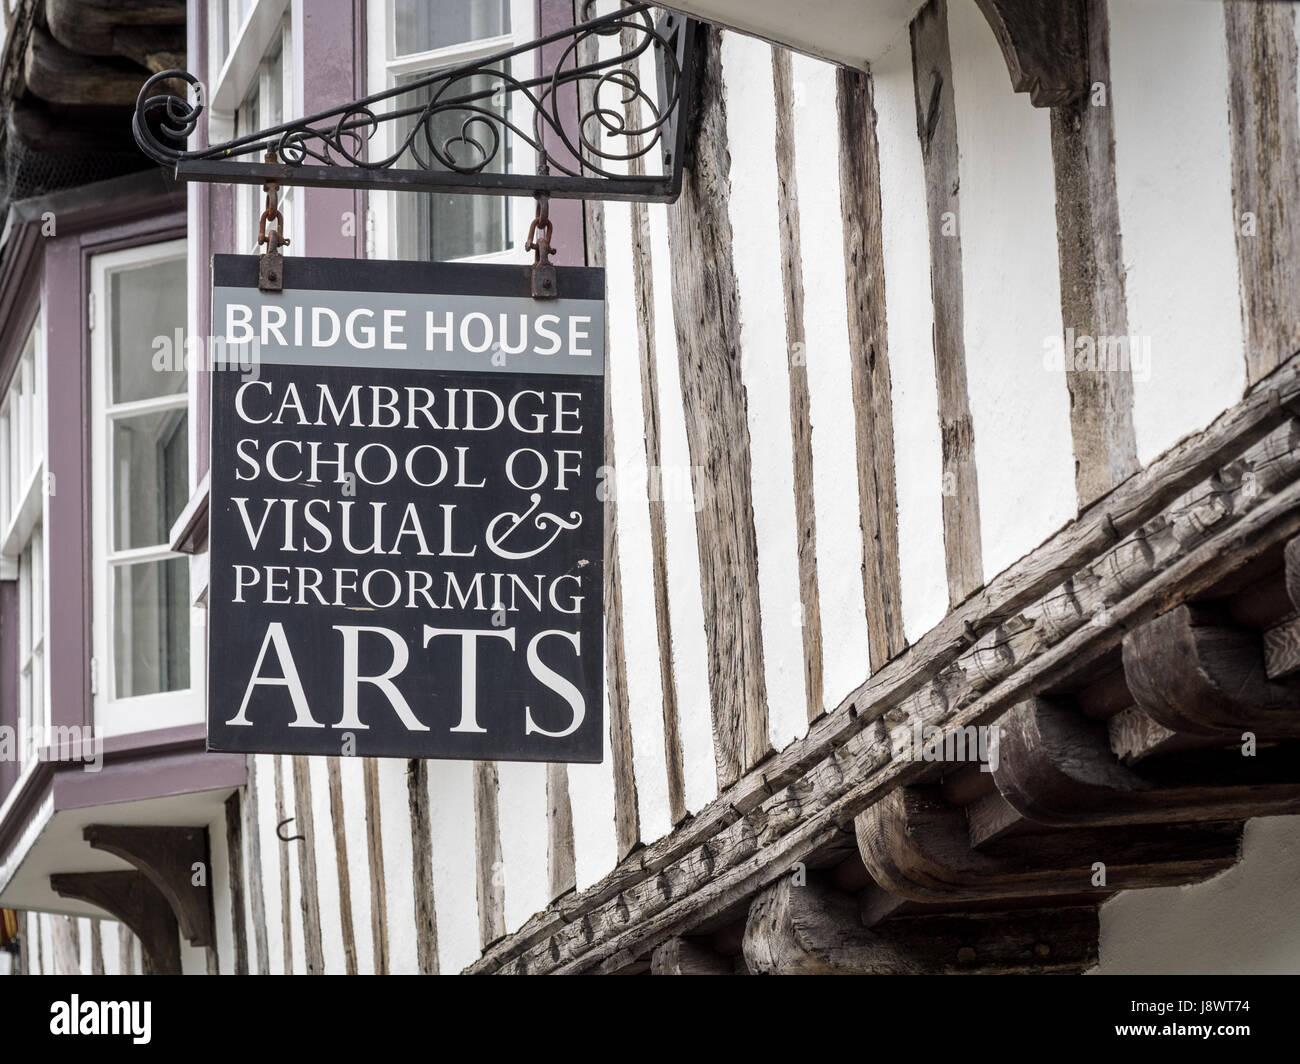 Cambridge School of Visual & Performing Arts - Windsor Thailand